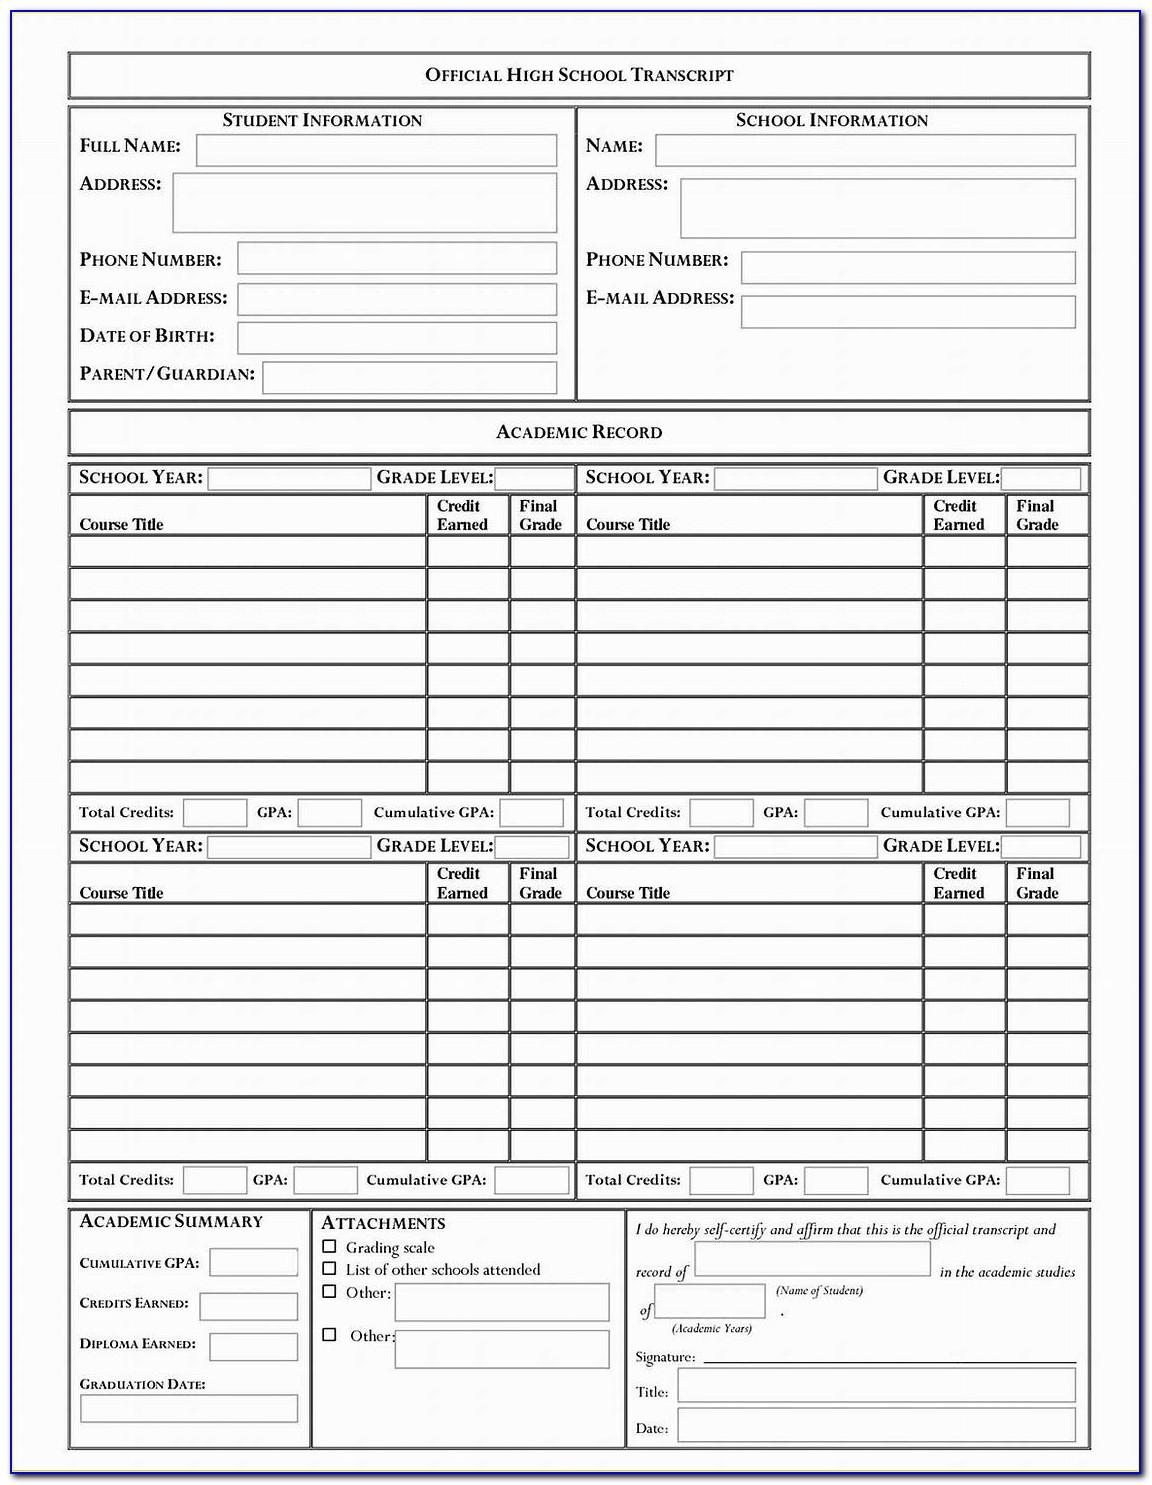 High School Transcript Request Form Pdf